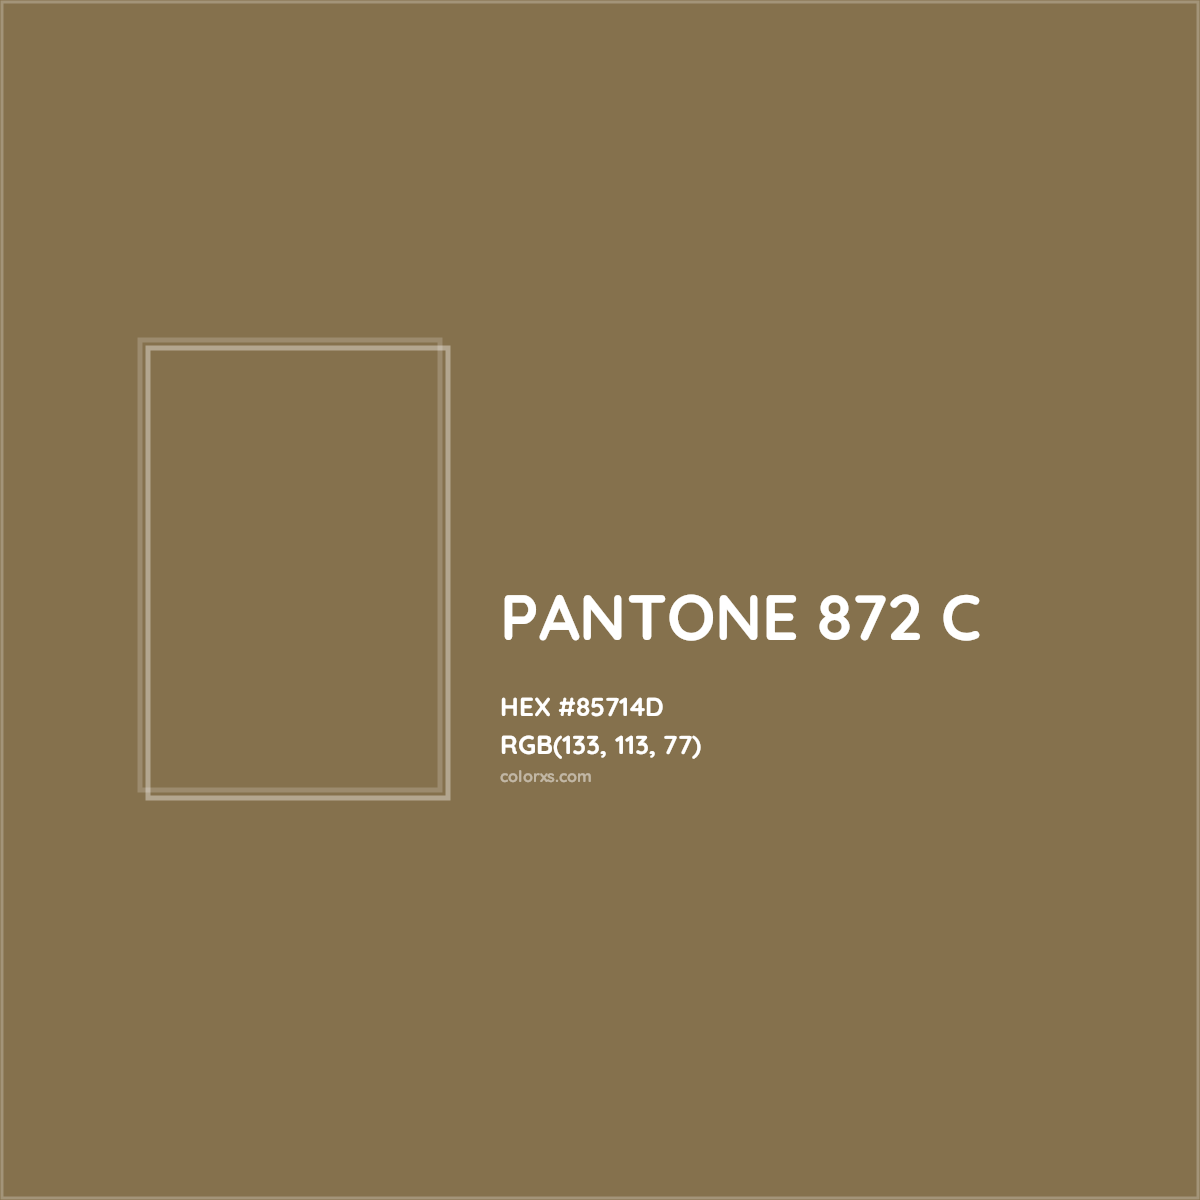 HEX #85714D PANTONE 872 C CMS Pantone PMS - Color Code